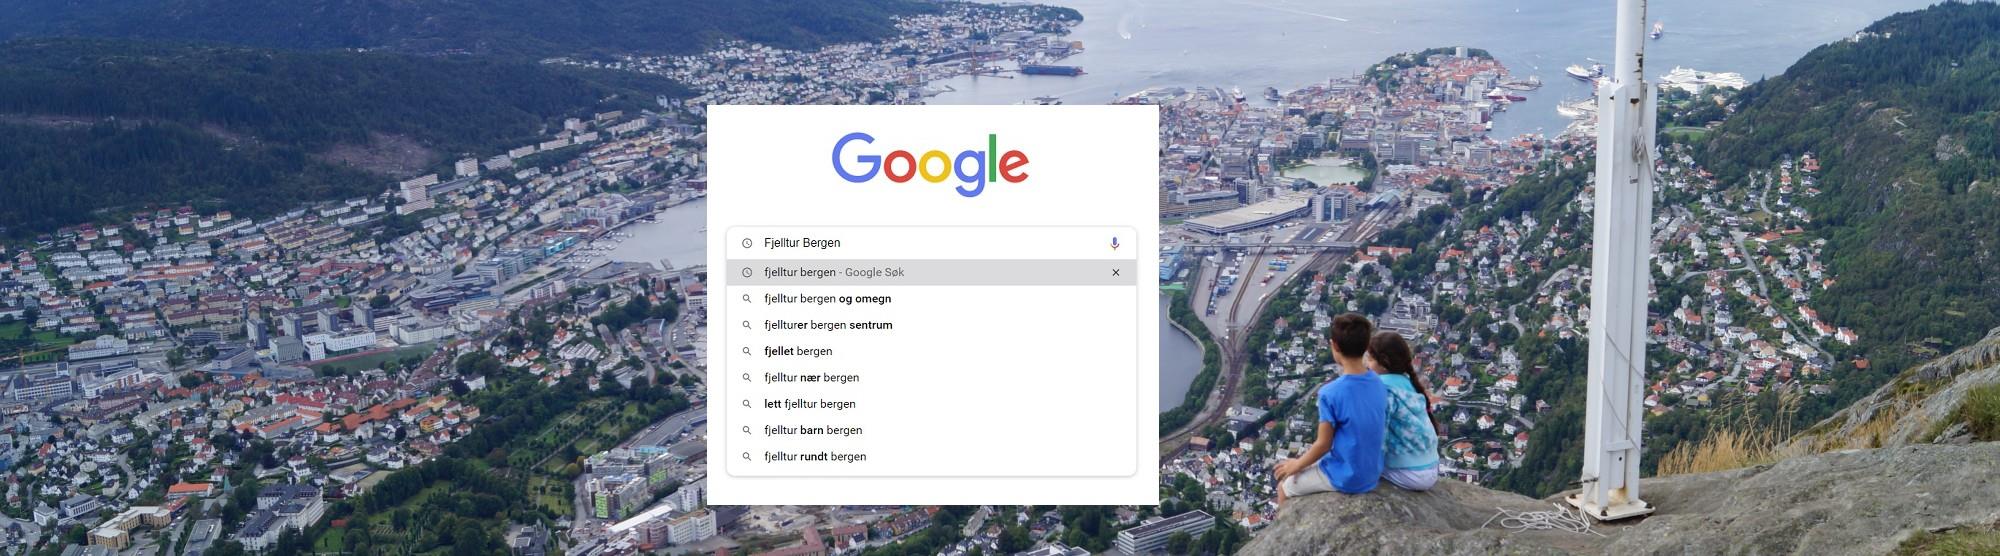 Bedre rangering i google. Tips fra Visit Bergen